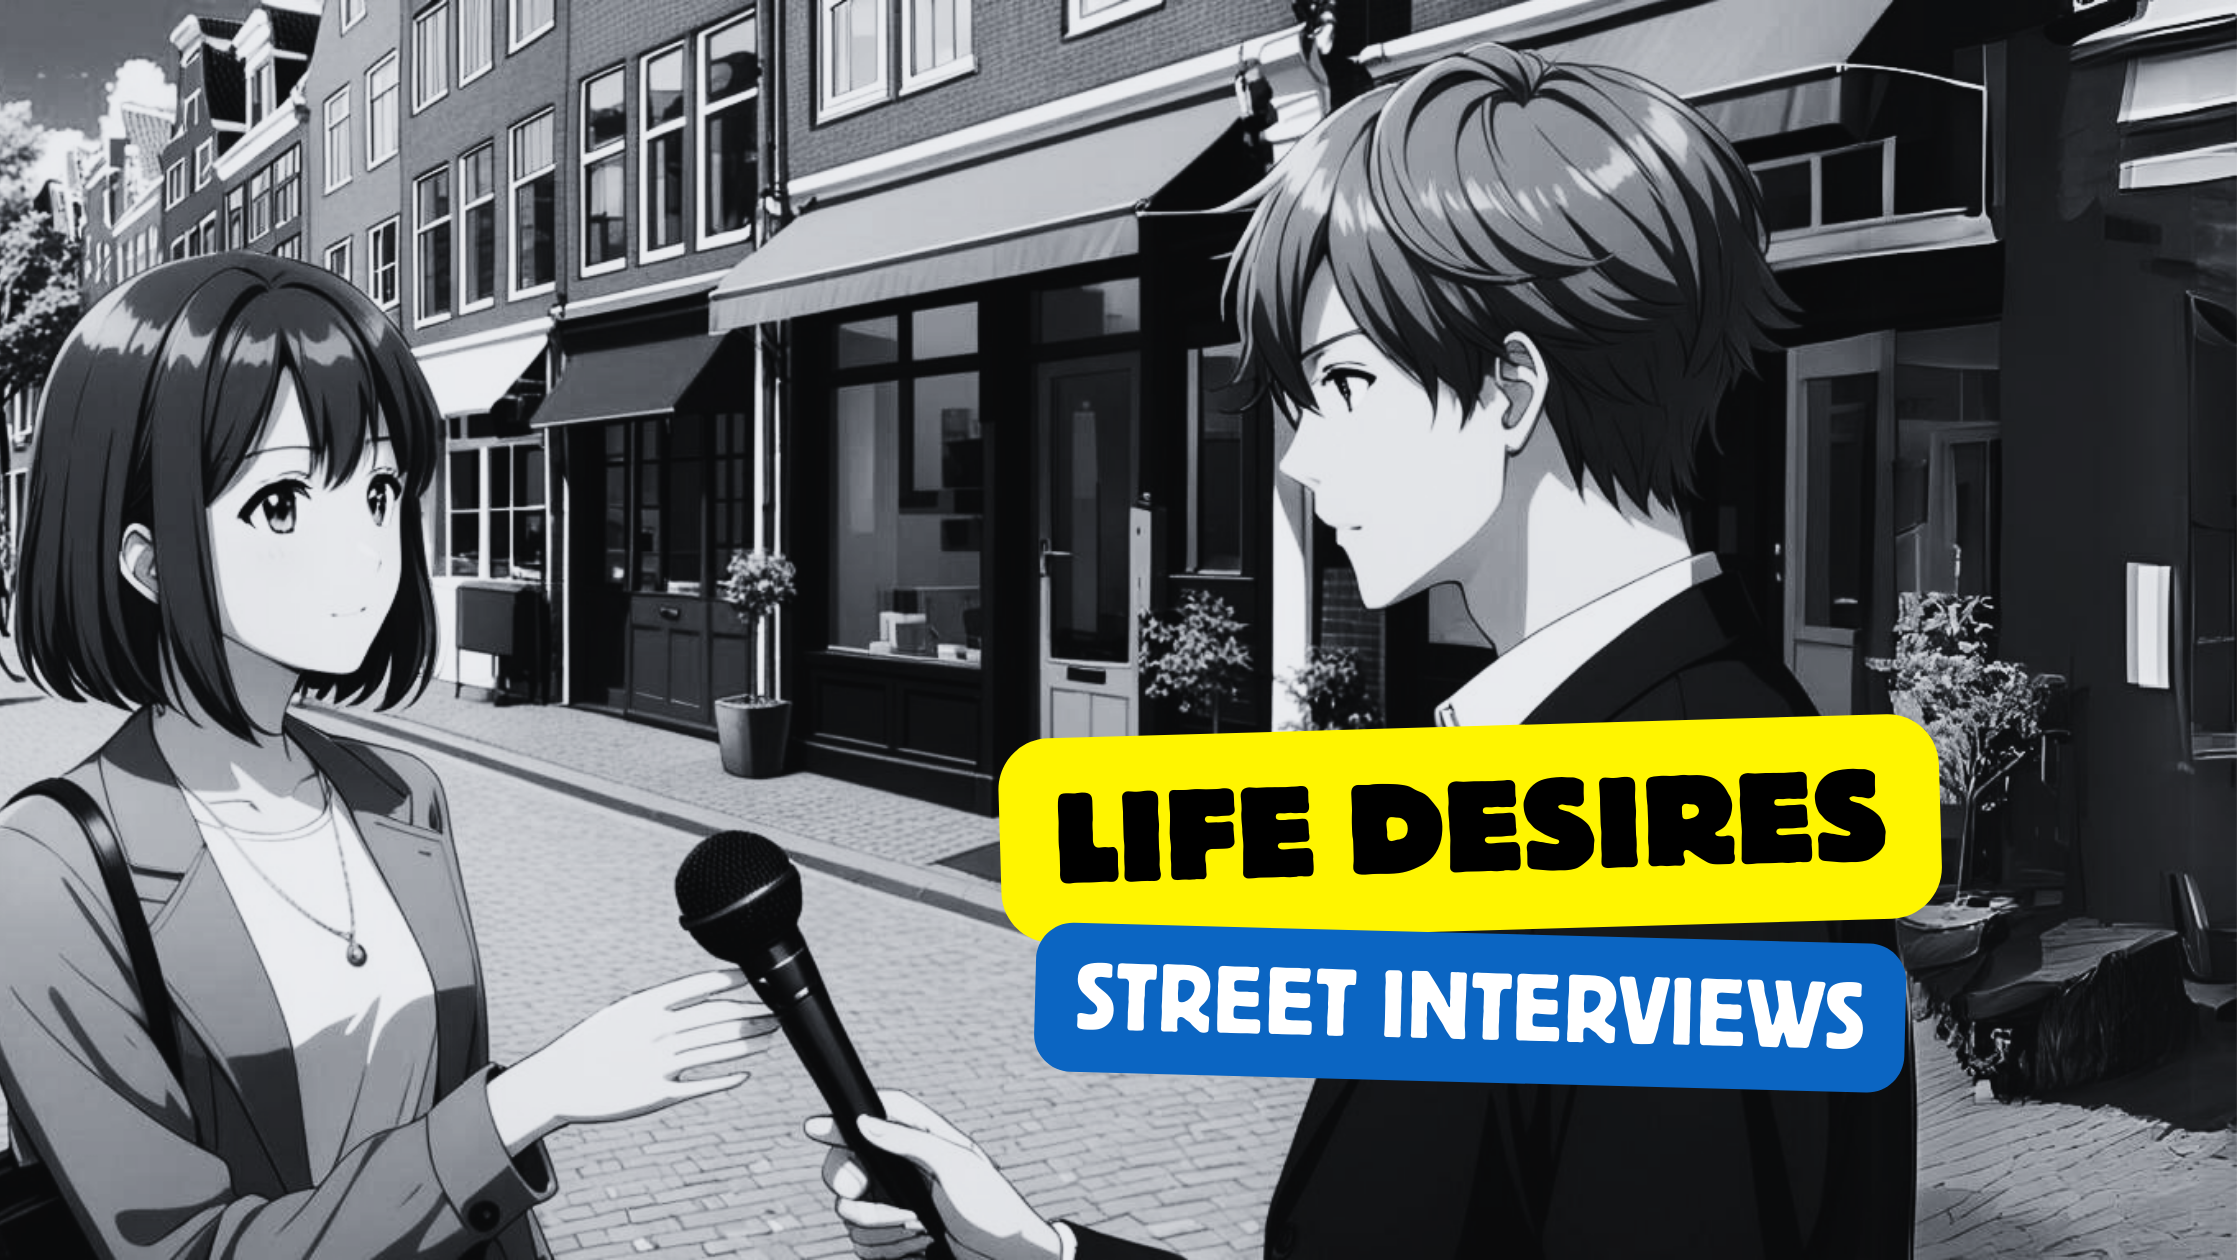 Life desires street interviews